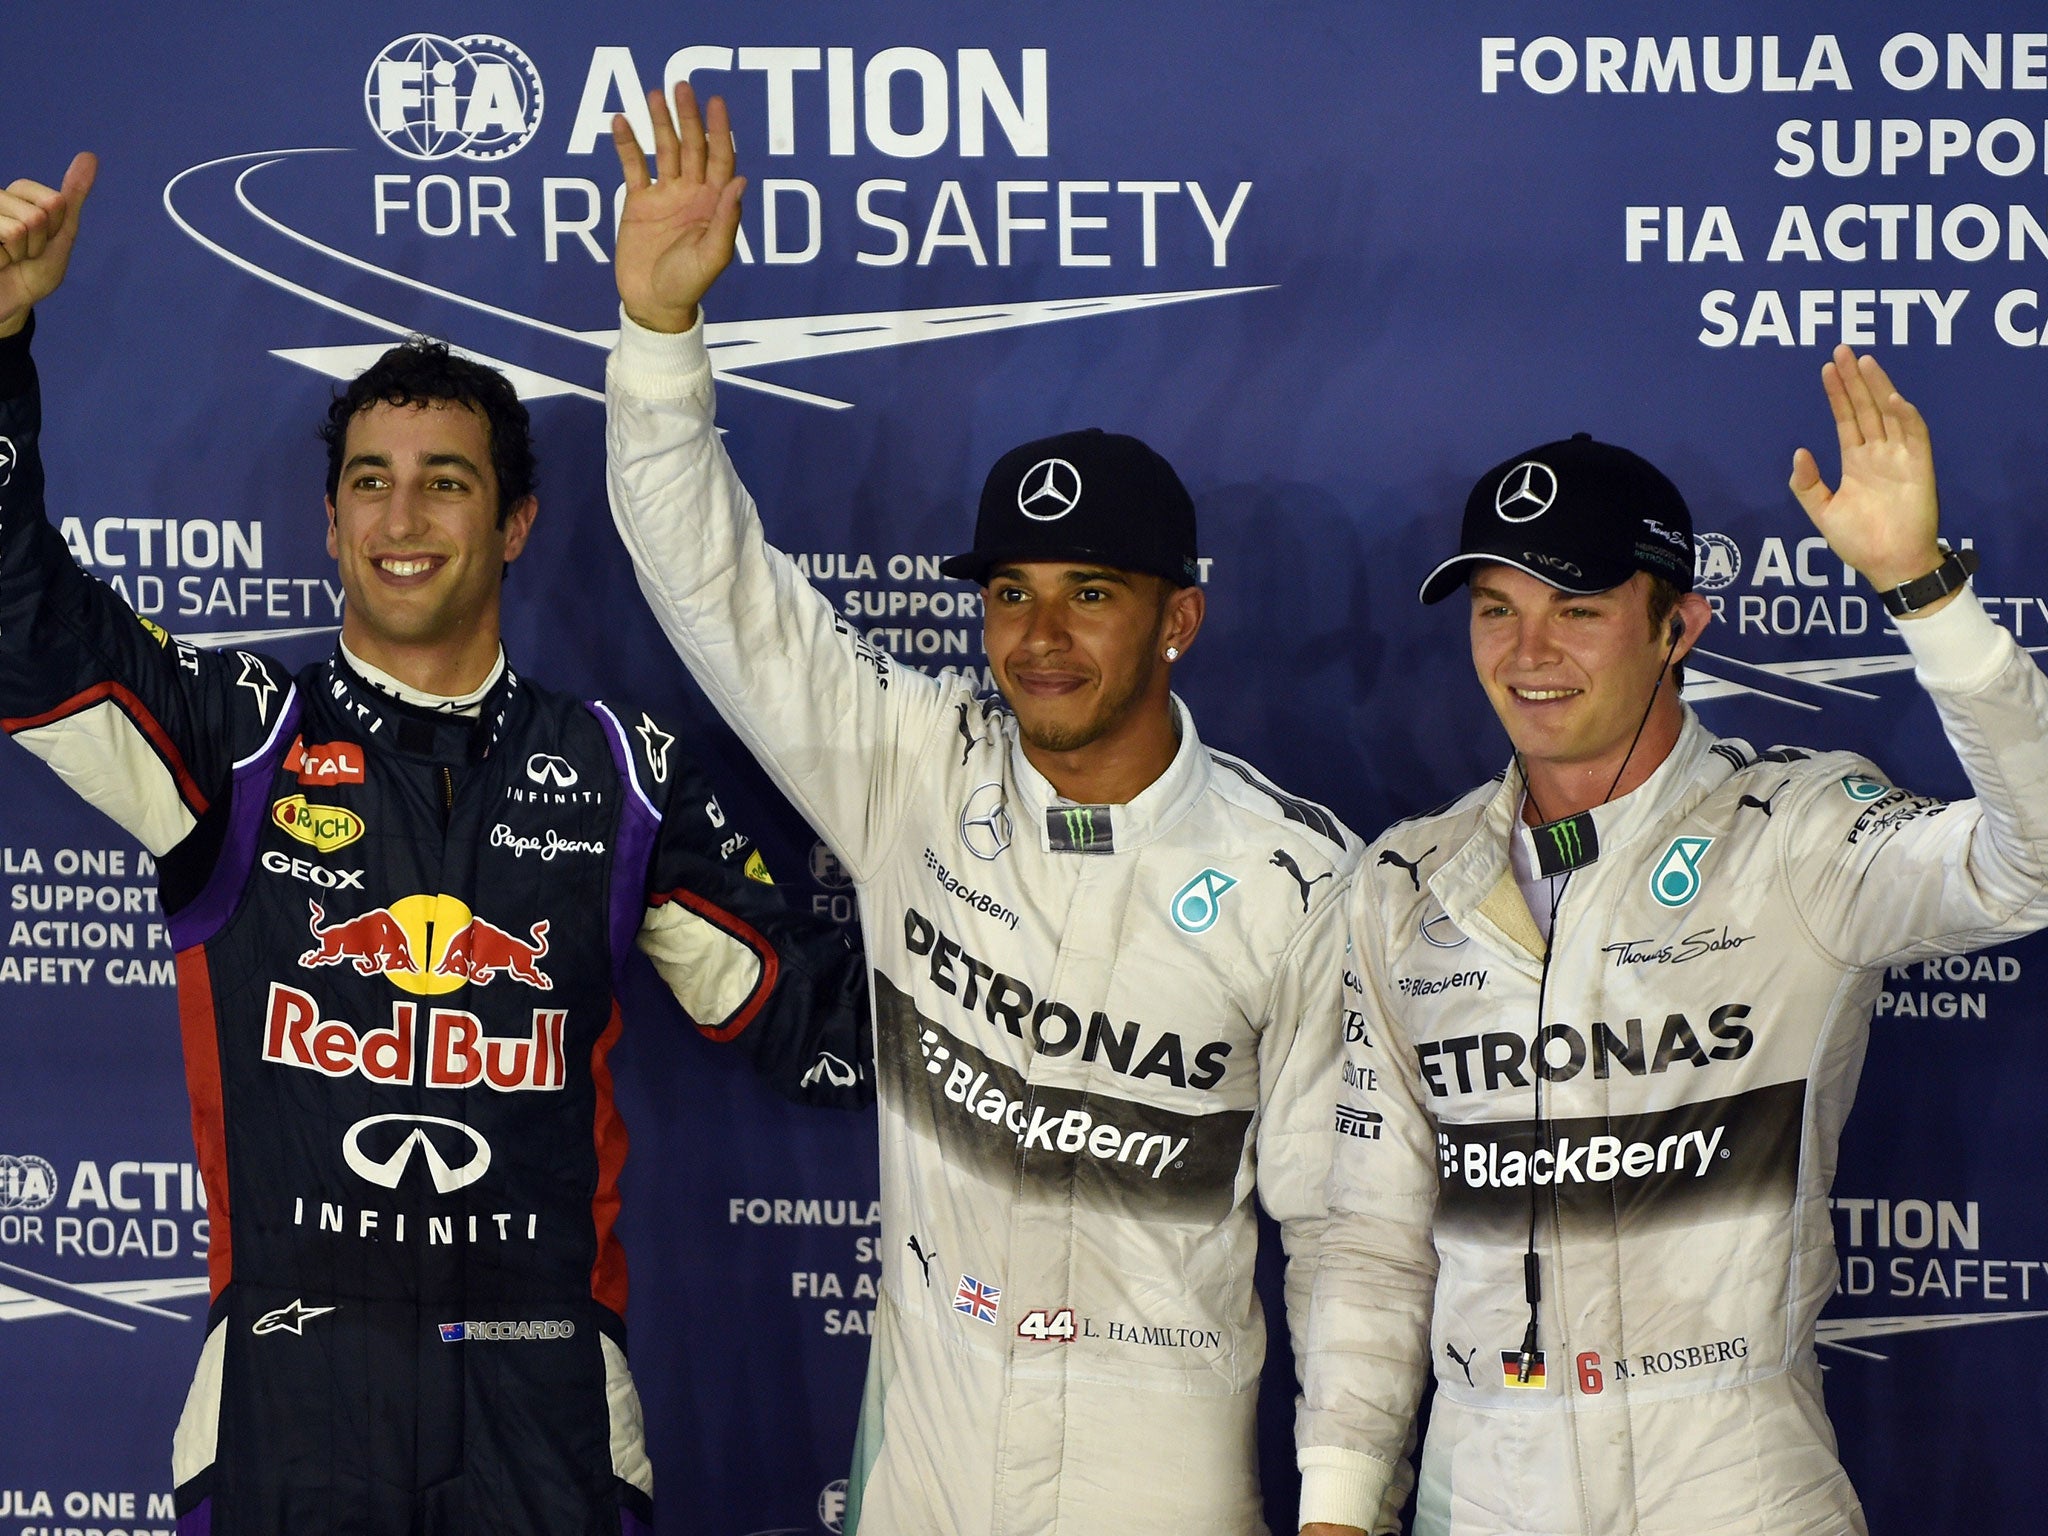 Lewis Hamilton will start the Singapore Grand Prix from pole, with Nico Rosberg second and Daniel Ricciardo third